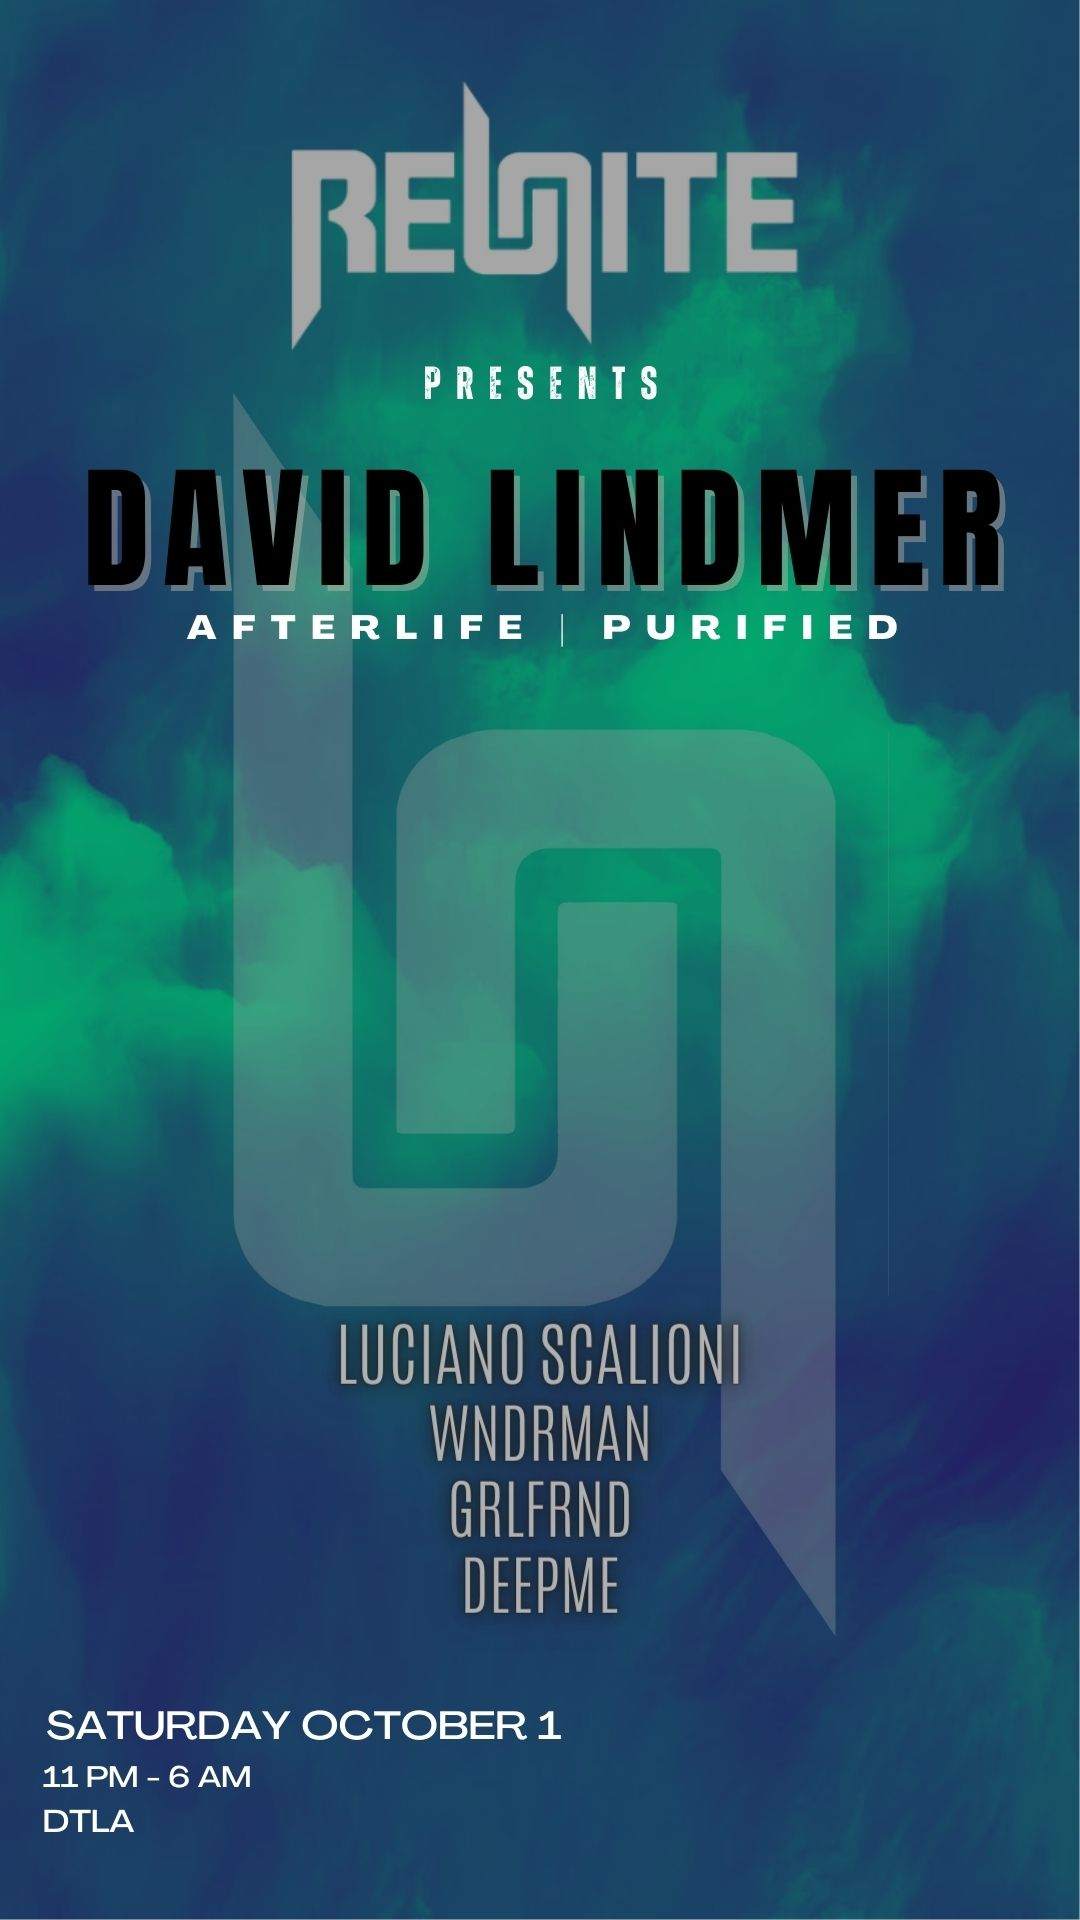 REUNITE PRESENTS: David Lindmer (AFTERLIFE - PURIFIED) - フライヤー裏